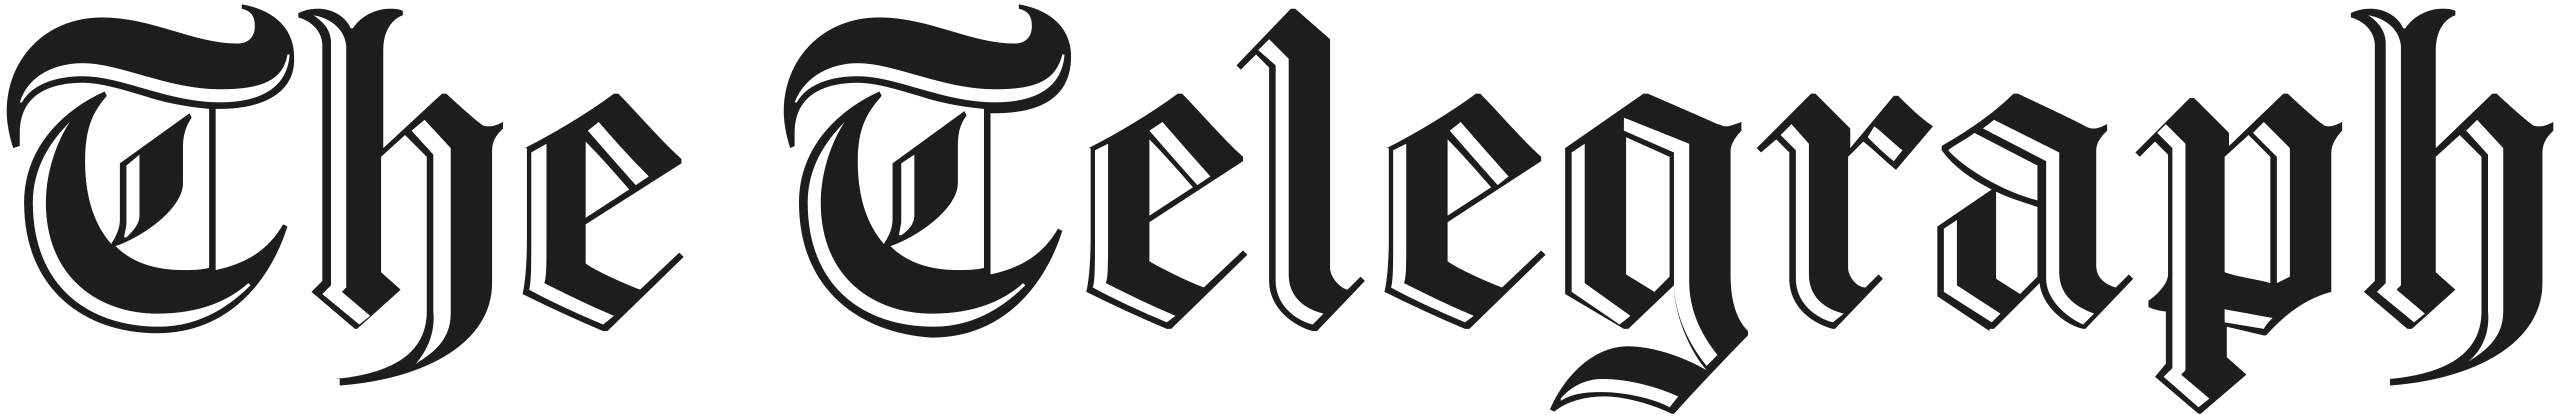 Logo of The Telegraph